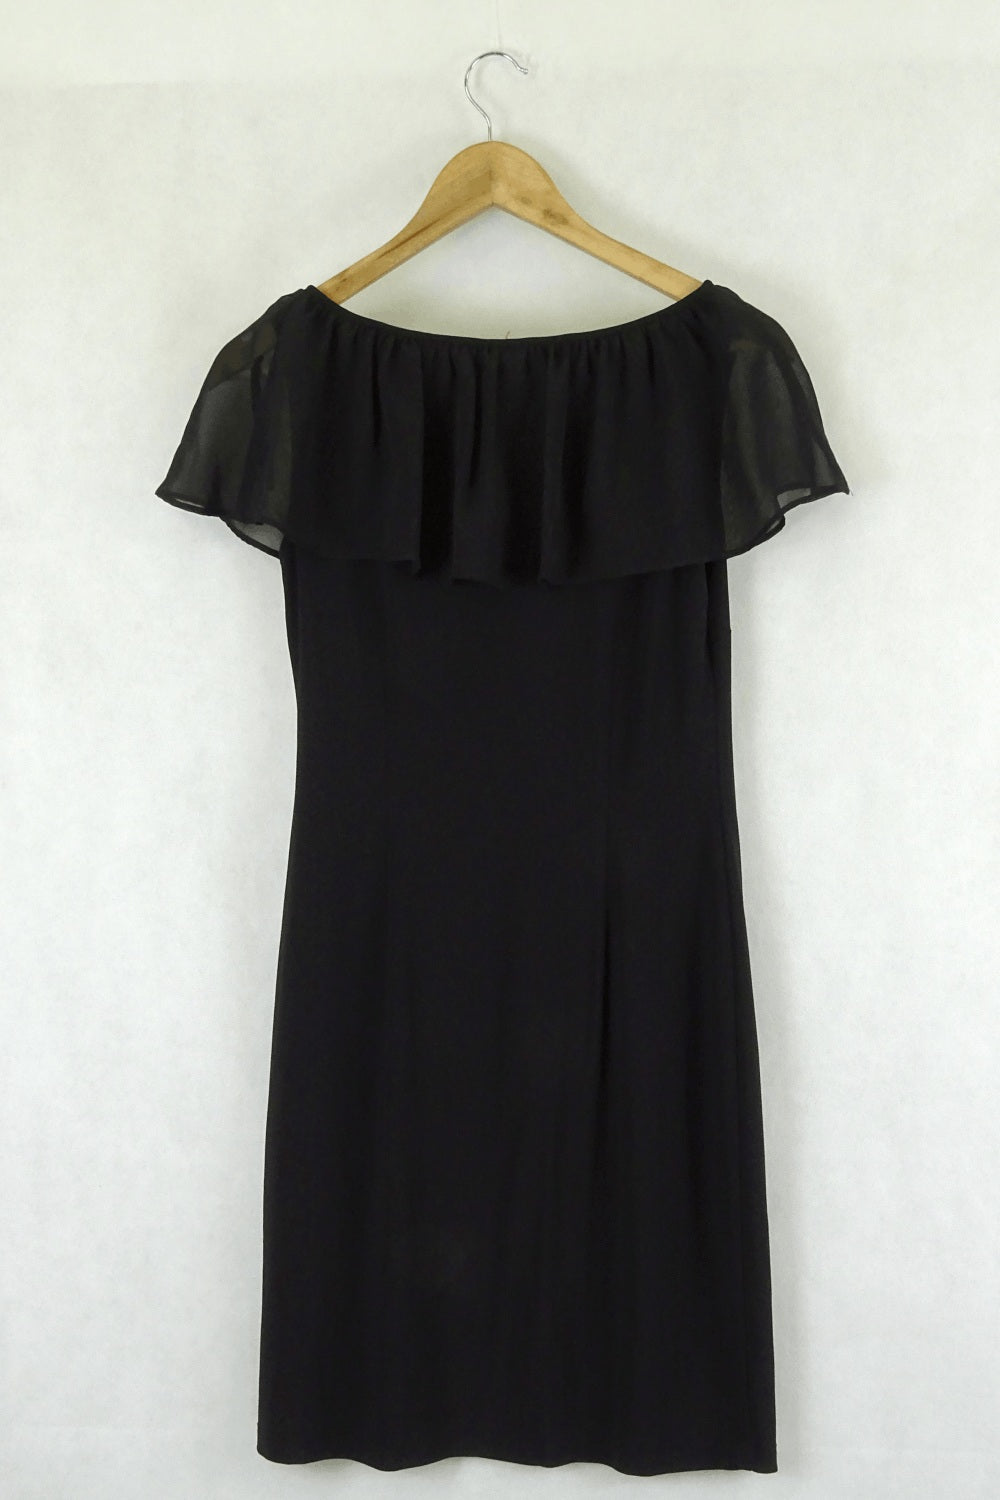 Leona Edmiston Black Dress XS